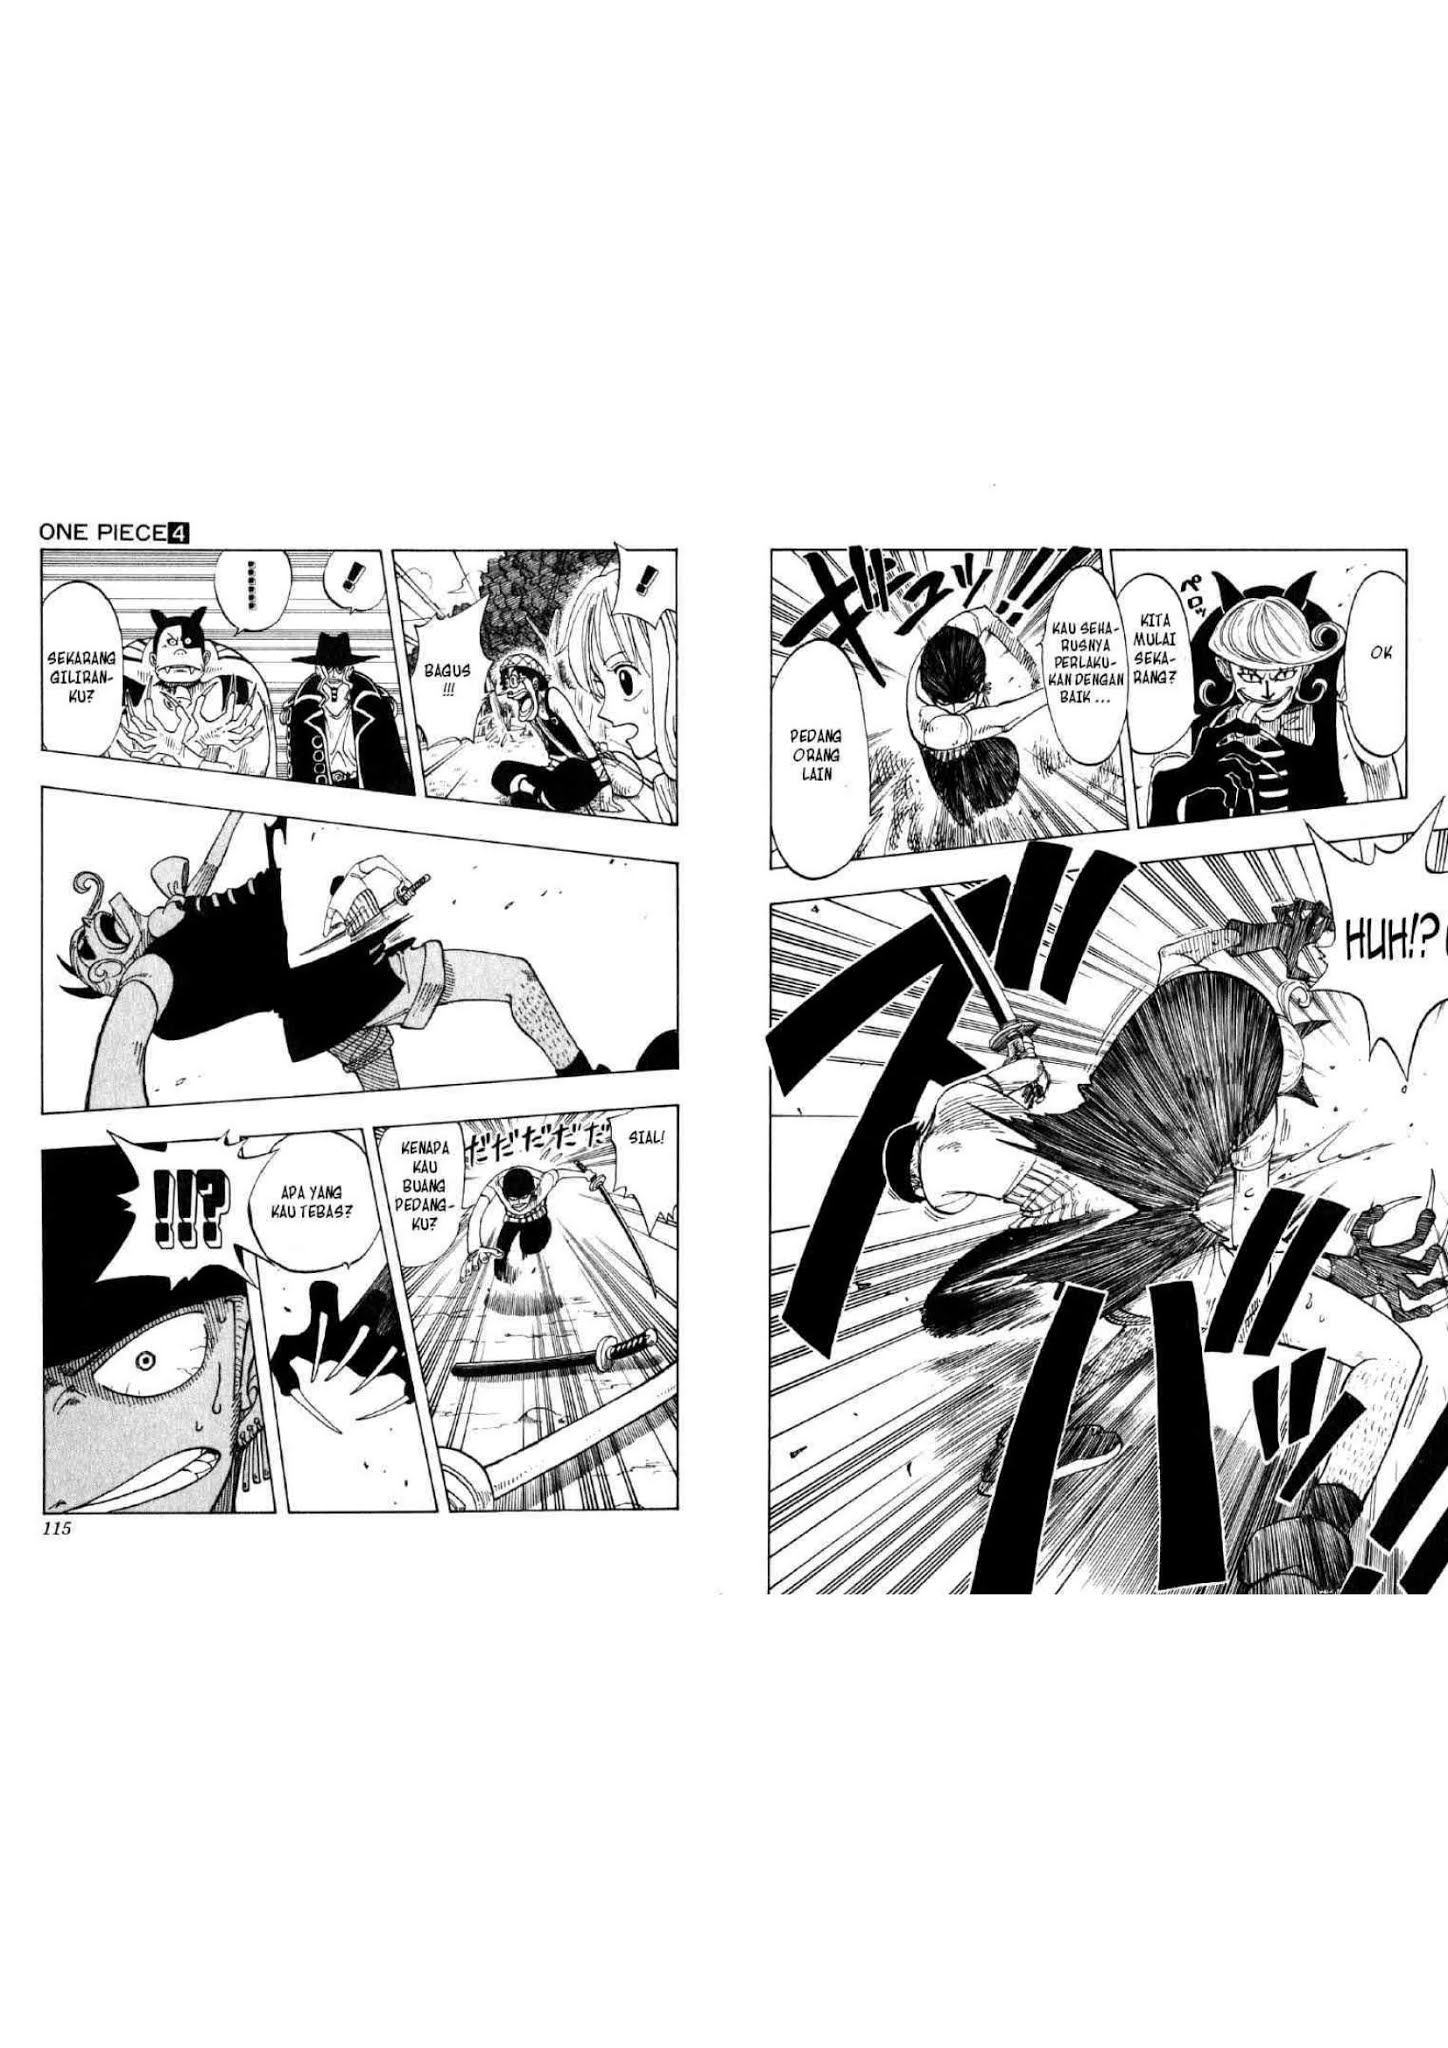 Manga One Piece Chapter 0032 Bahasa Indonesia